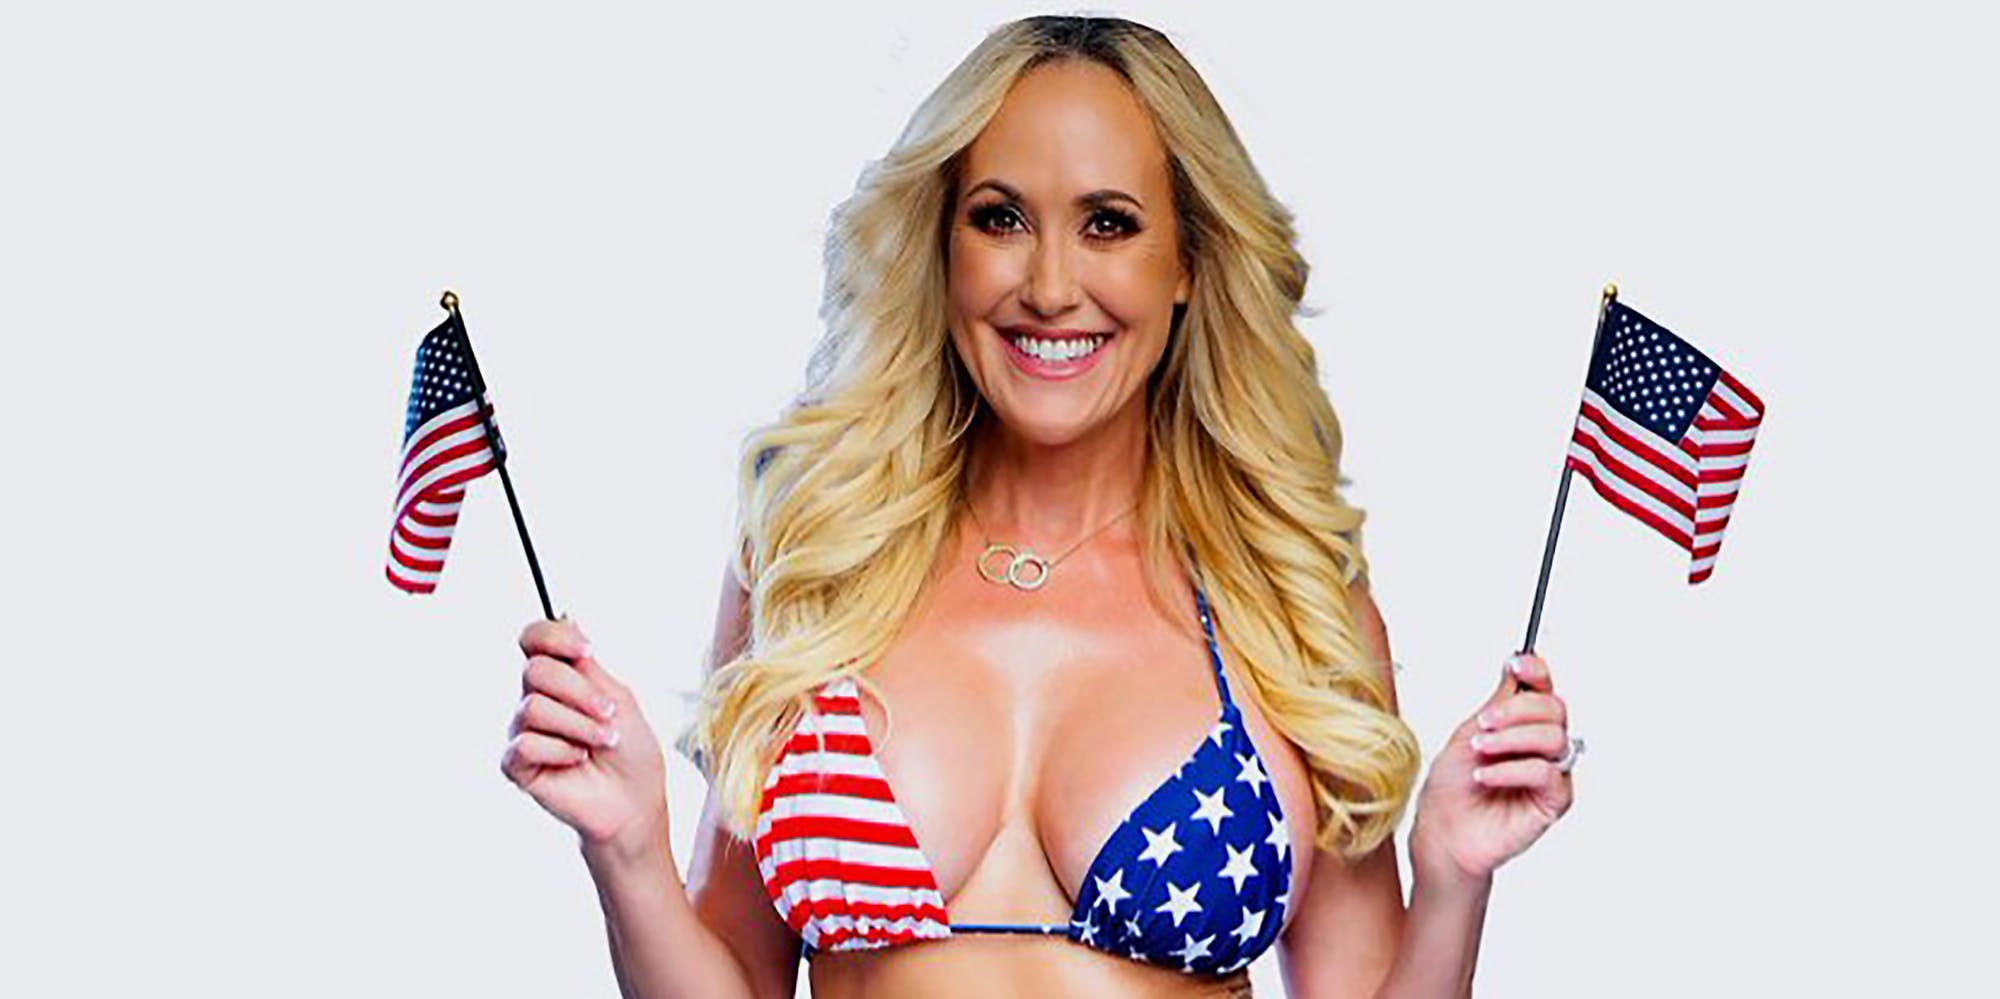 Brandi Love Porn Star Bikini - Turning Point USA: Conservatives Divided Over Porn Star Shunning